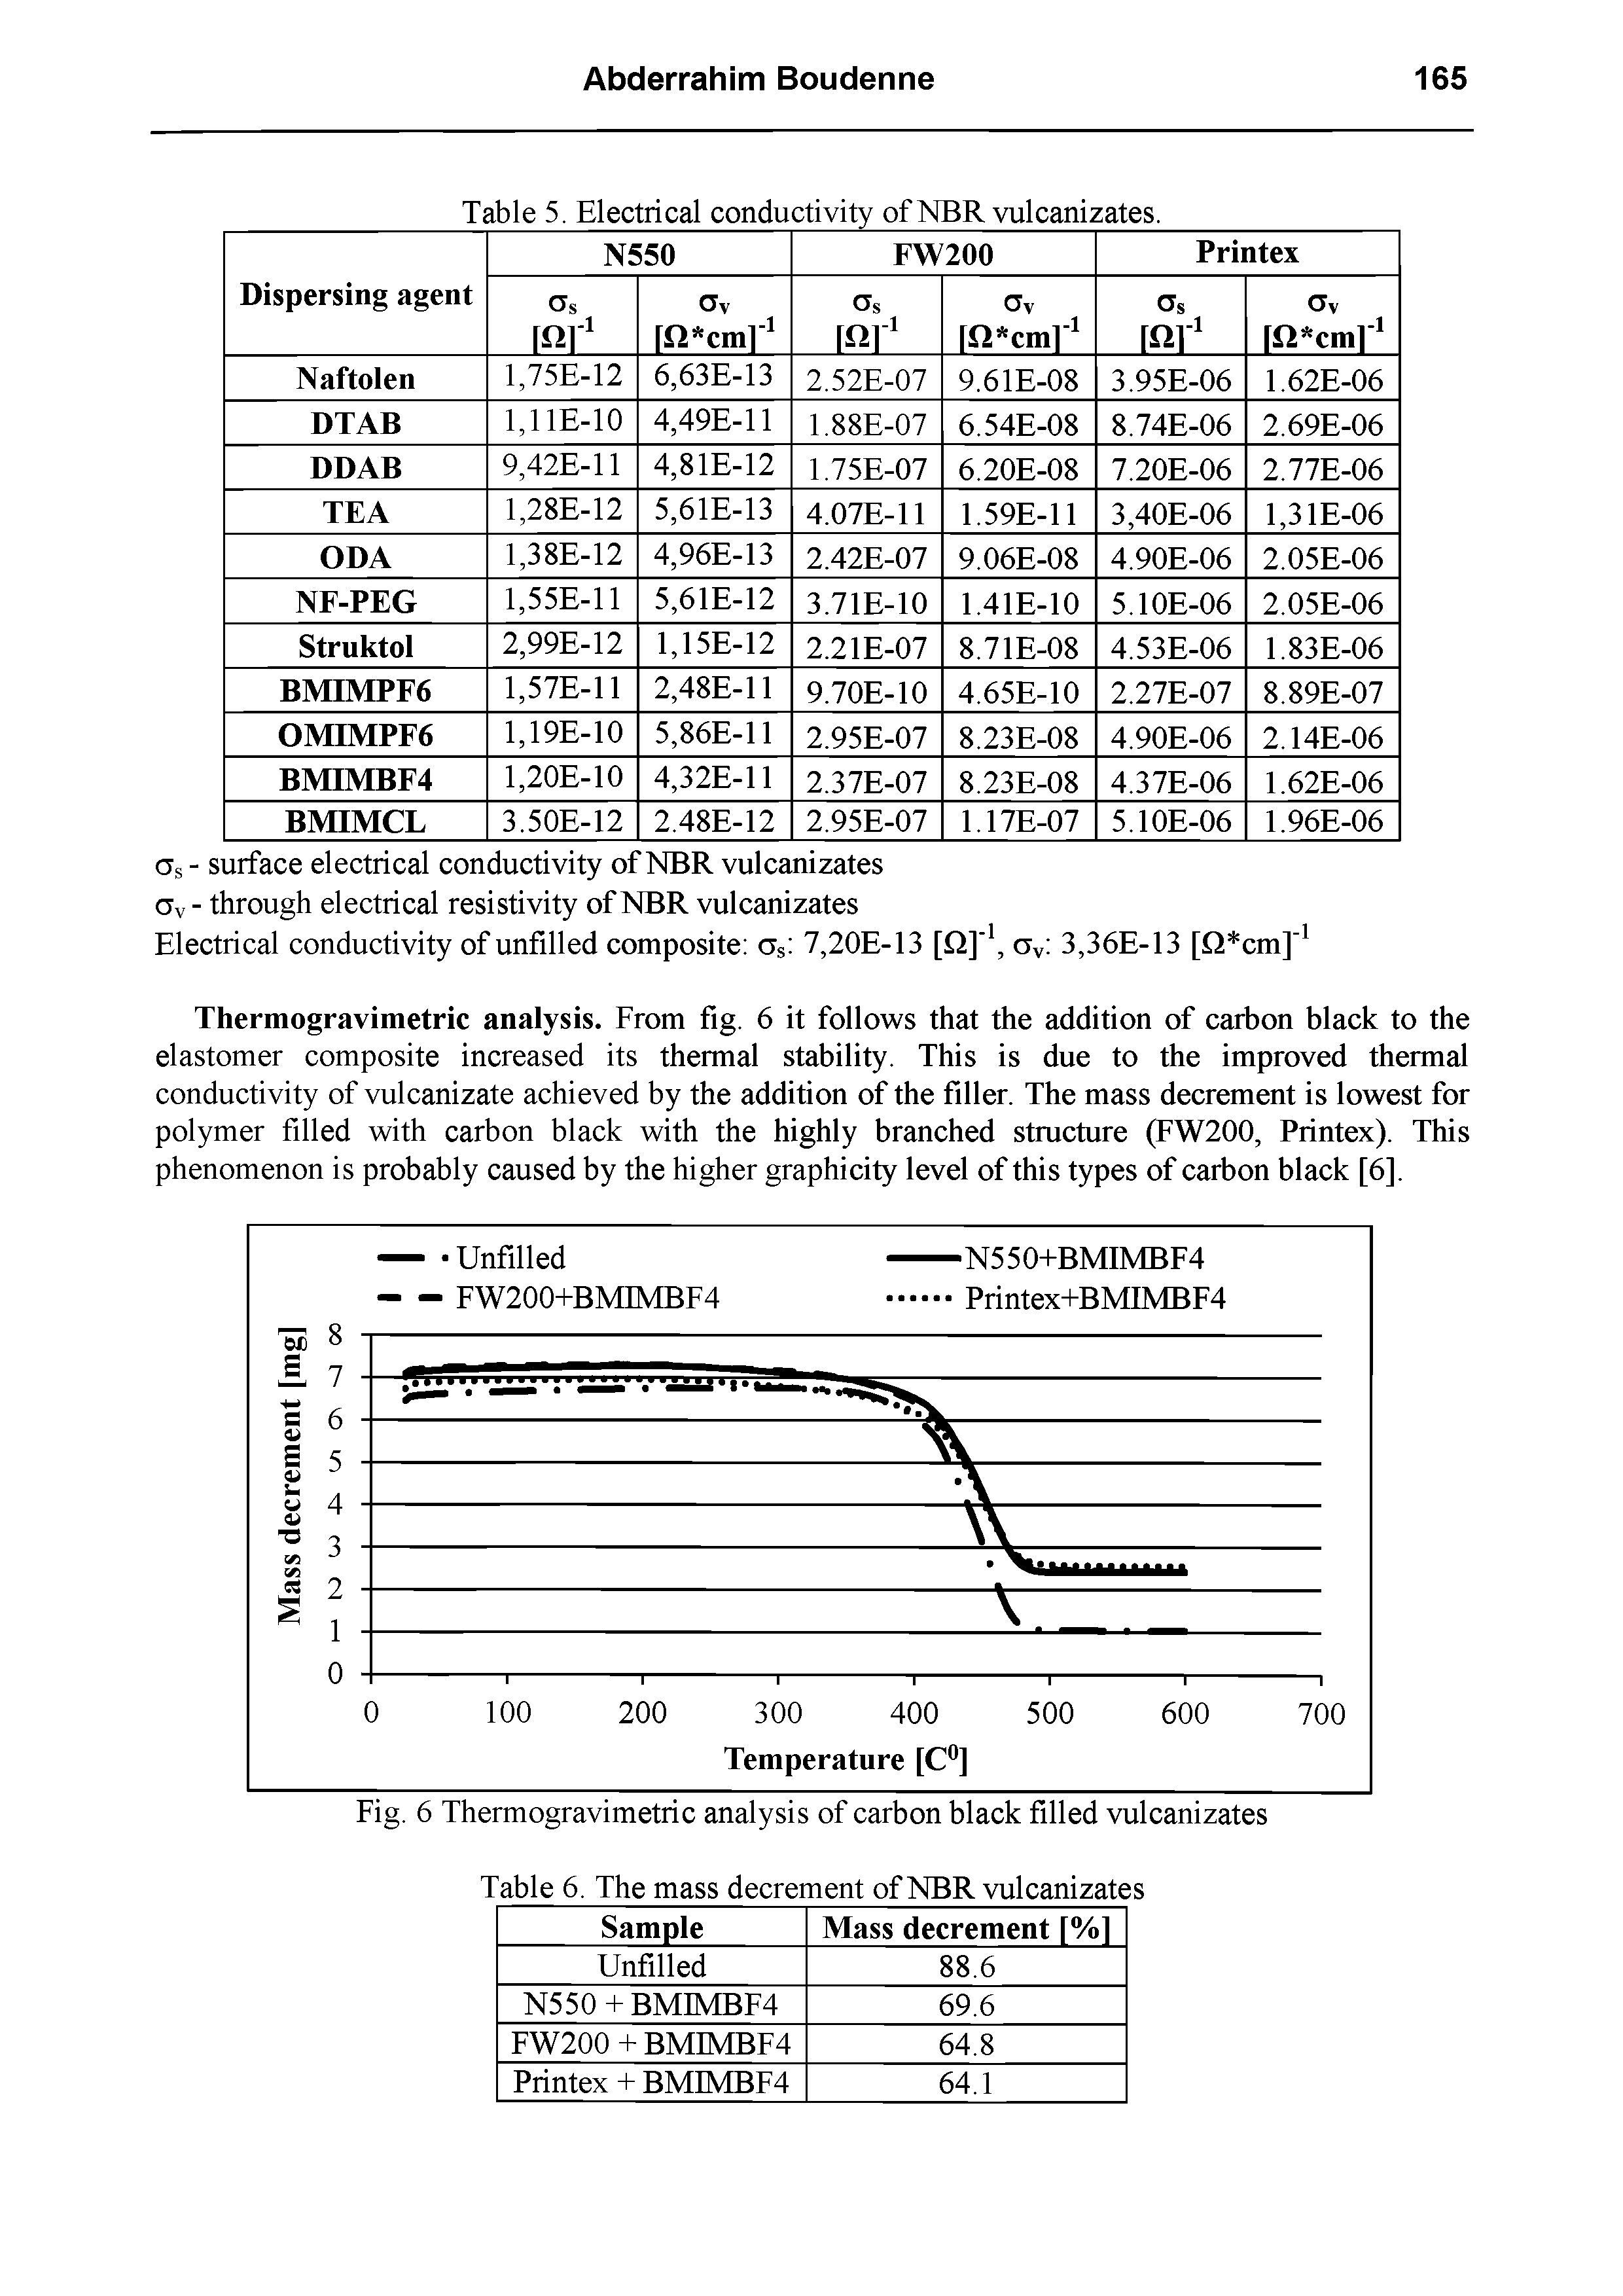 Fig. 6 Thermogravimetric analysis of carbon black filled vulcanizates Table 6. The mass decrement ofNBR vulcanizates...